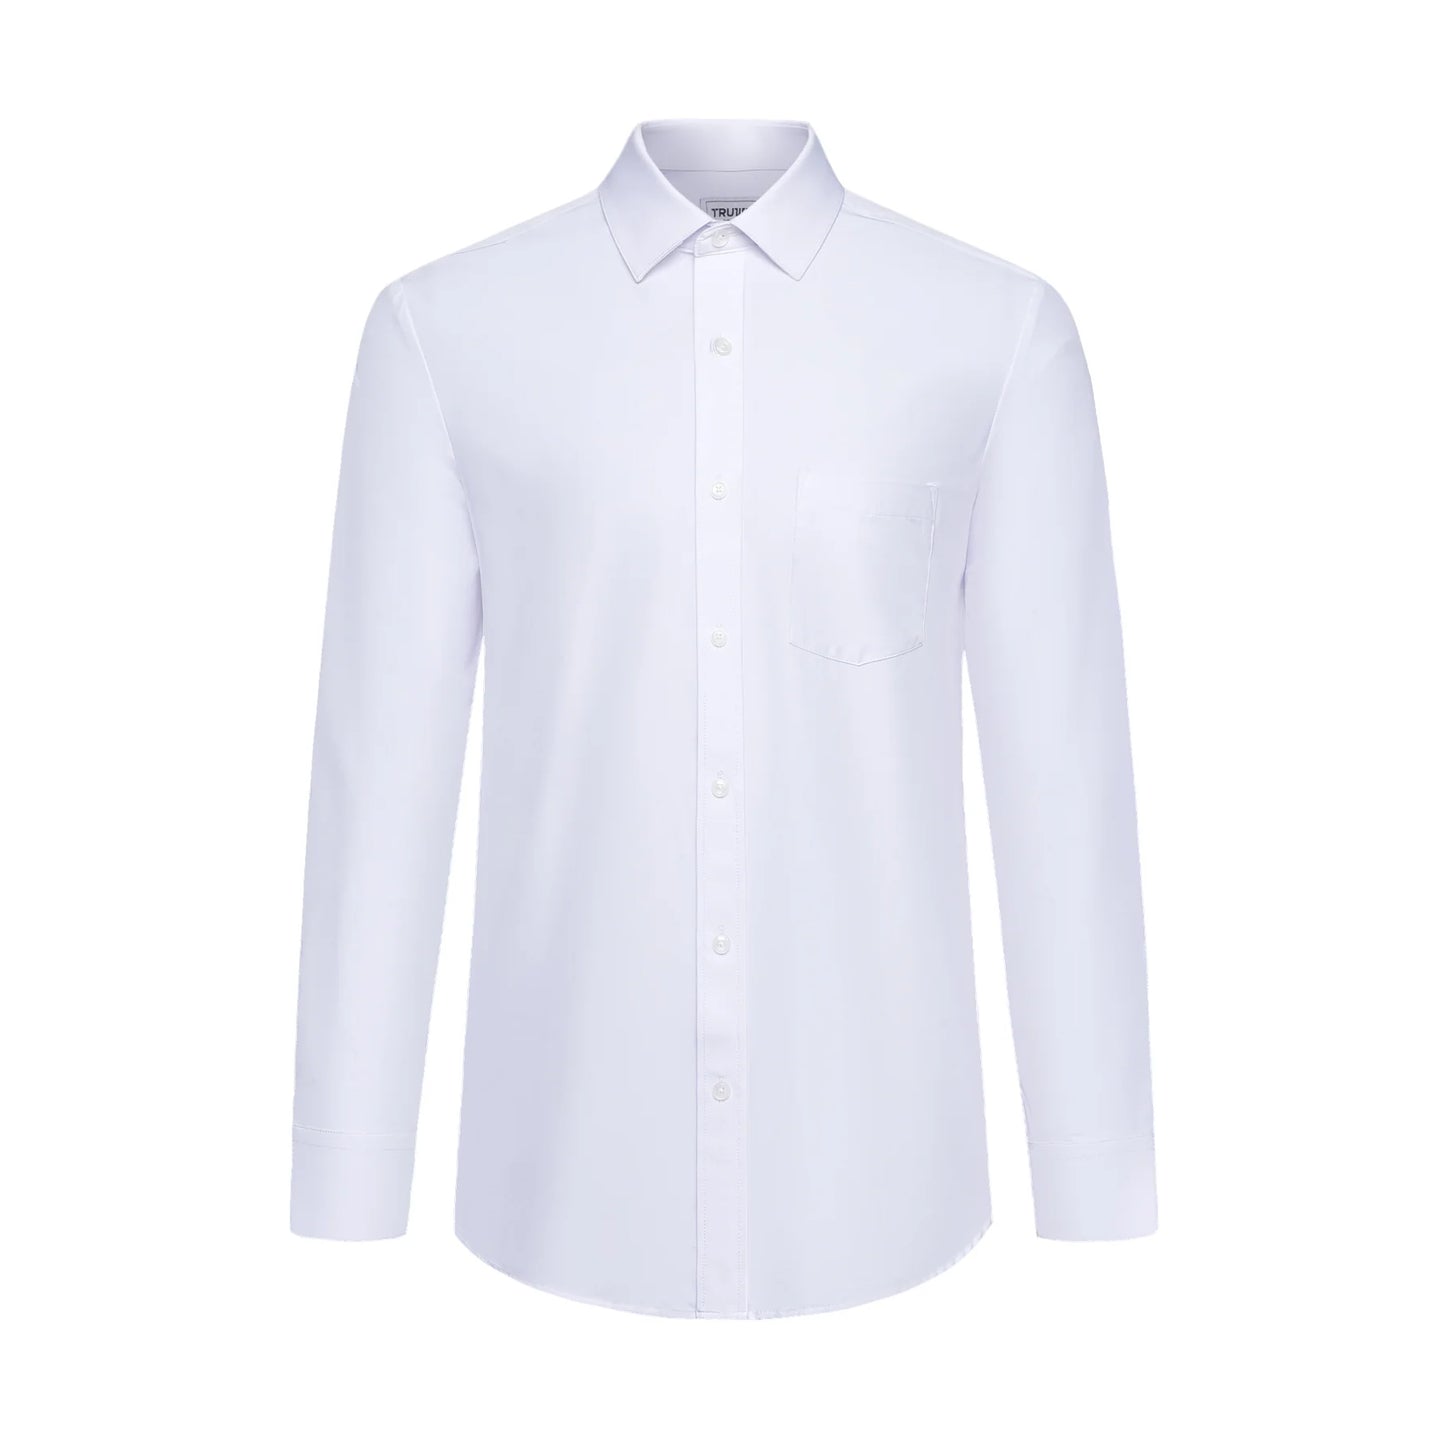 Phenom Classic White Dress Shirt Short/Long Sleeve